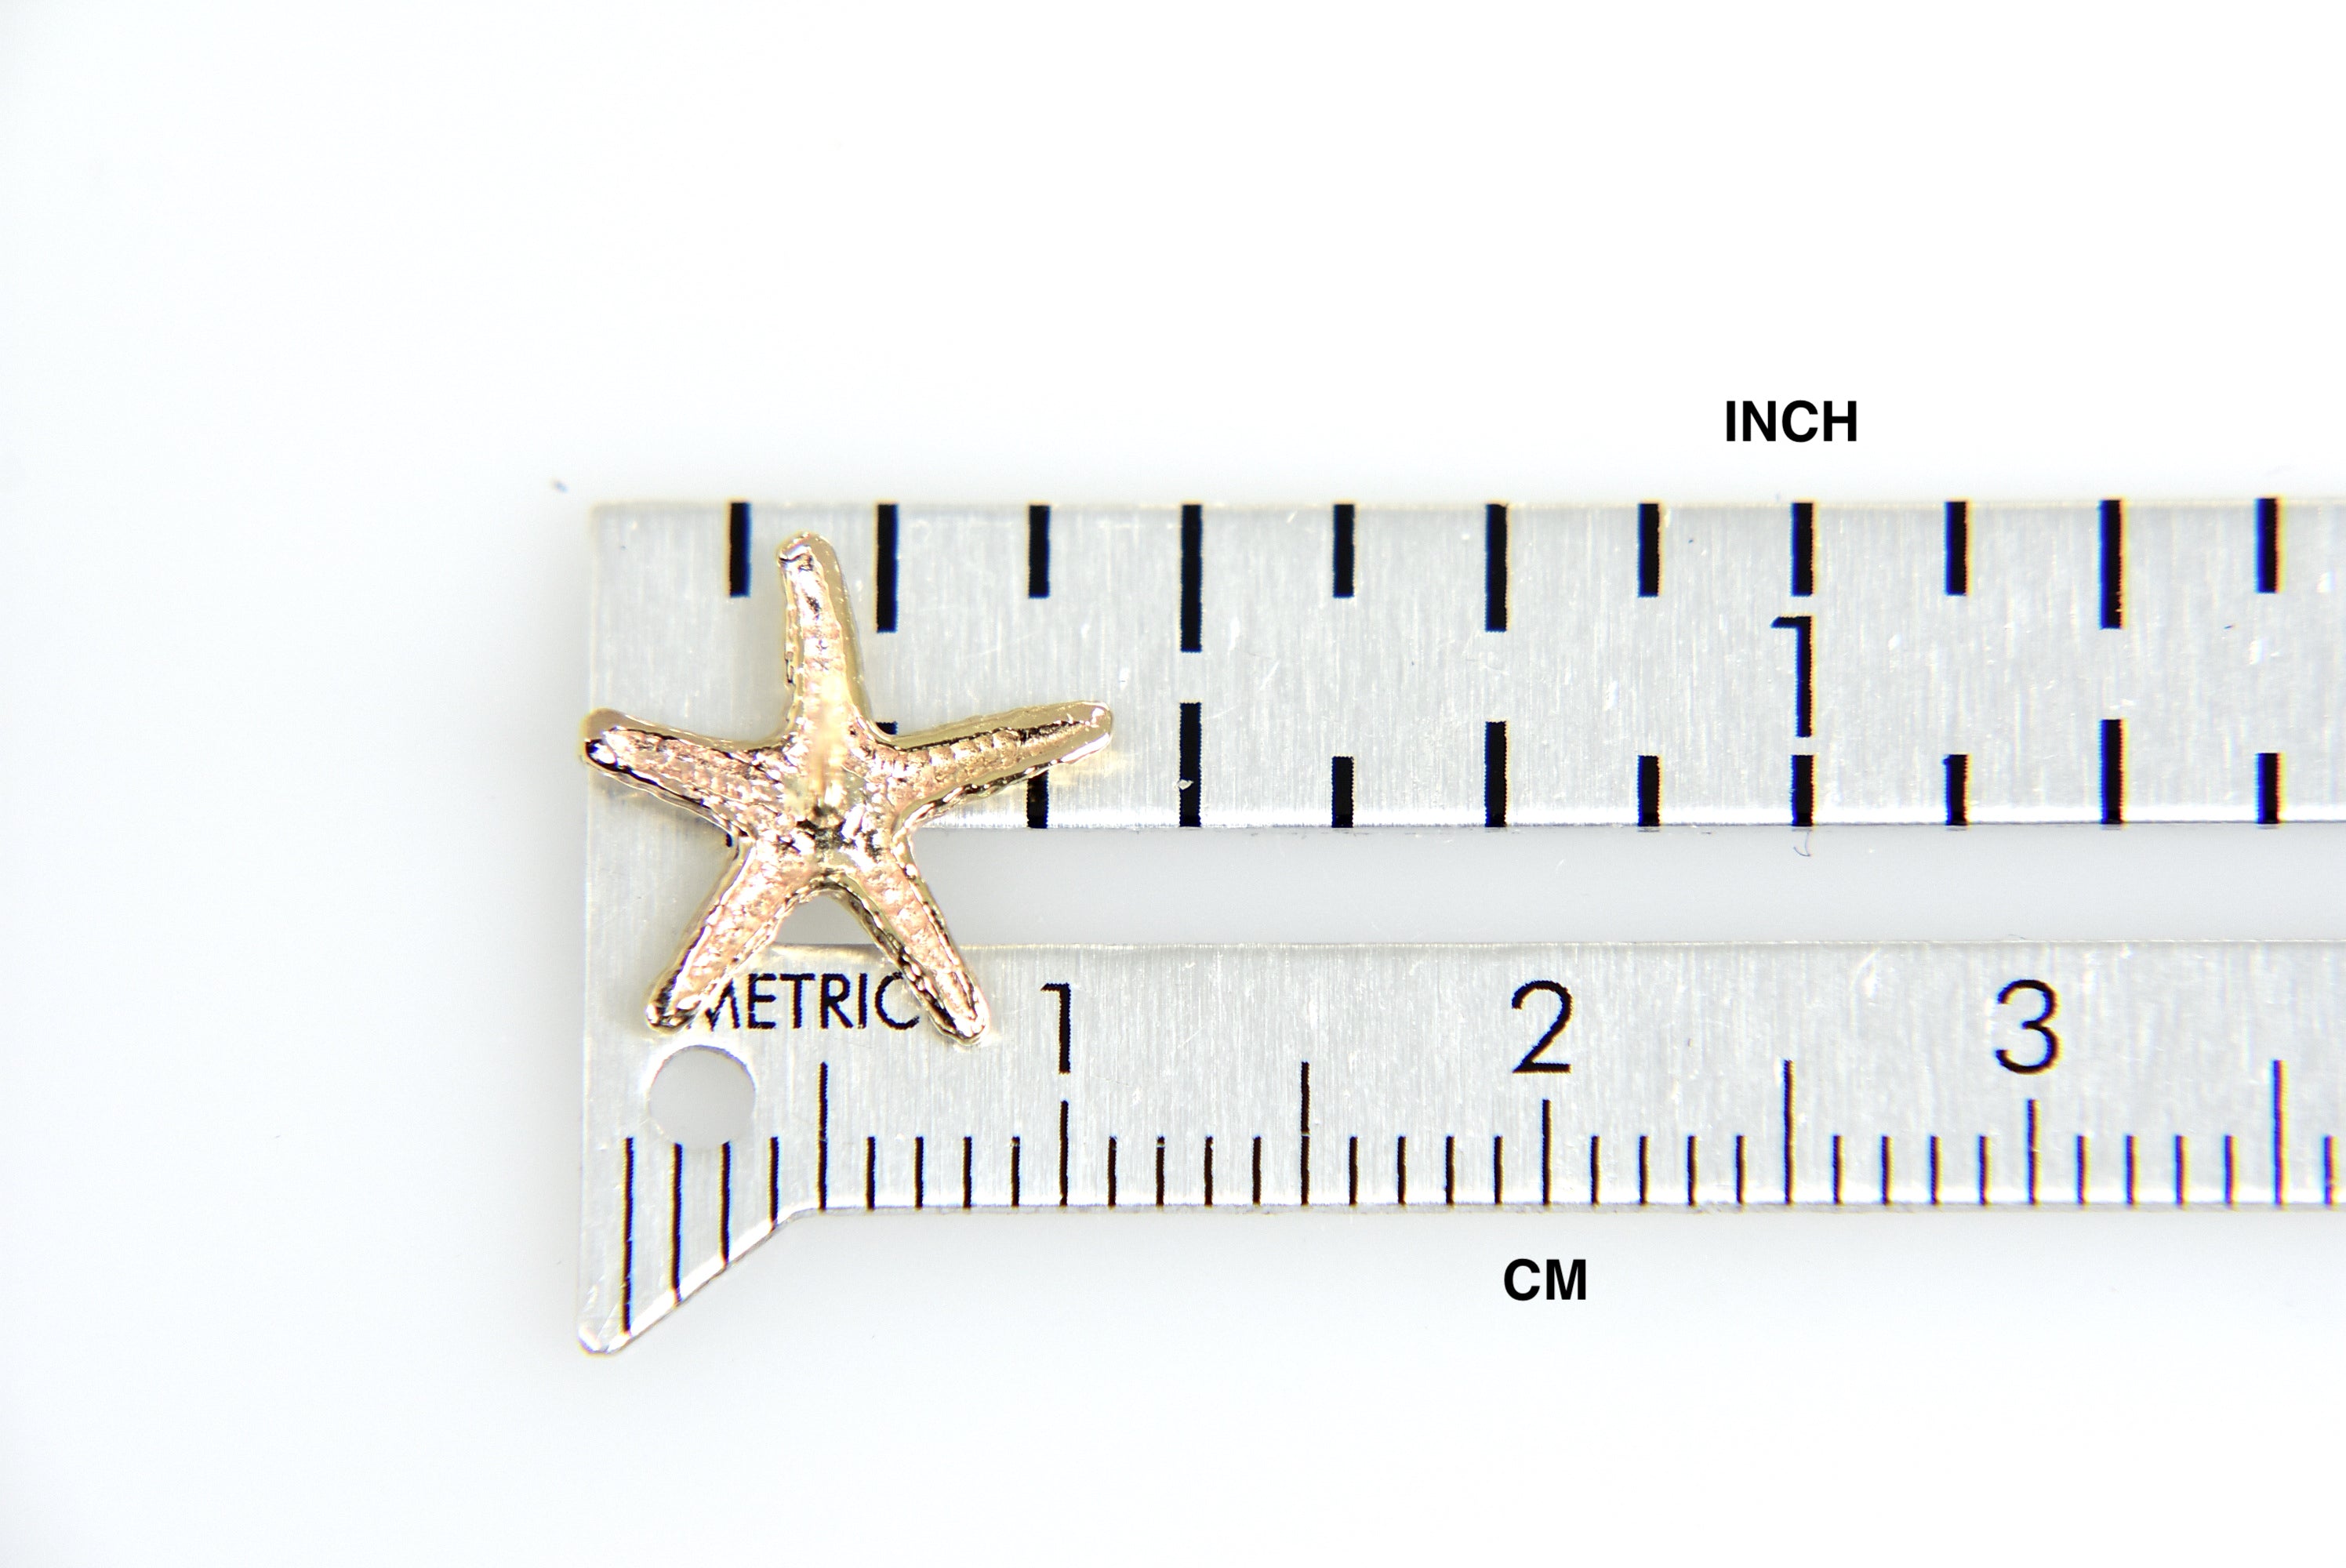 14k Yellow Gold Starfish Stud Post Push Back Earrings